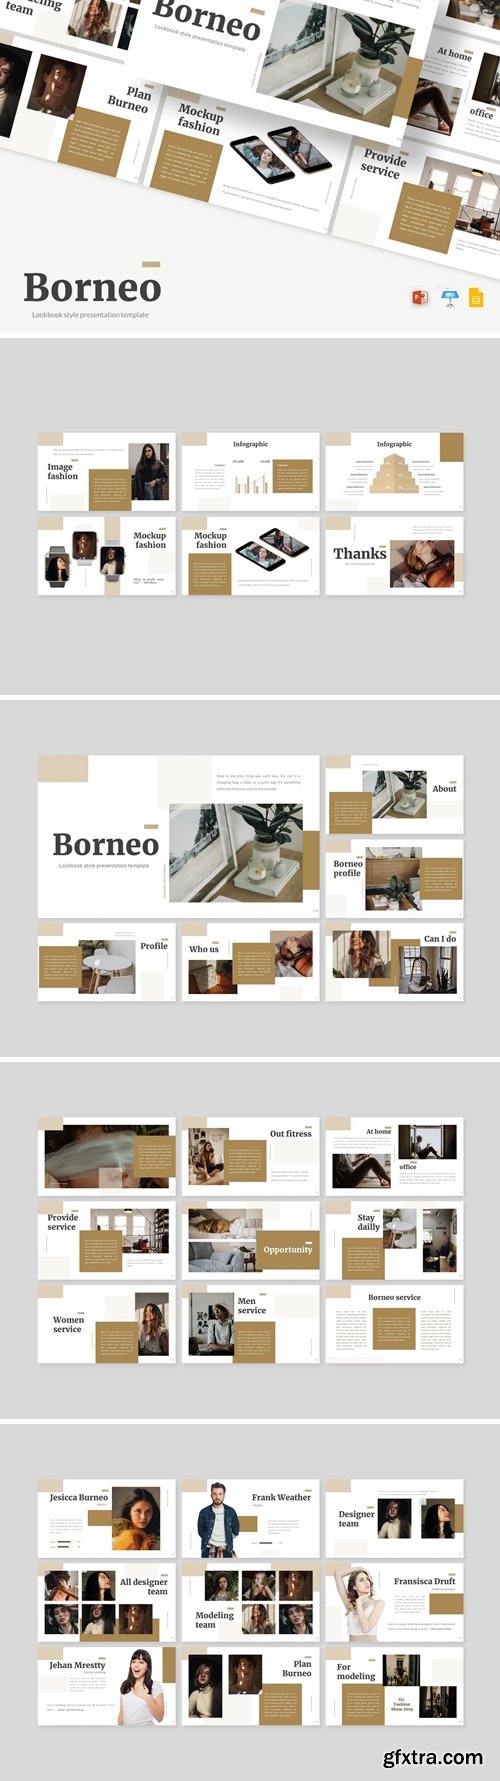 Borneo - Powerpoint/GoogleSlides/Keynote Template